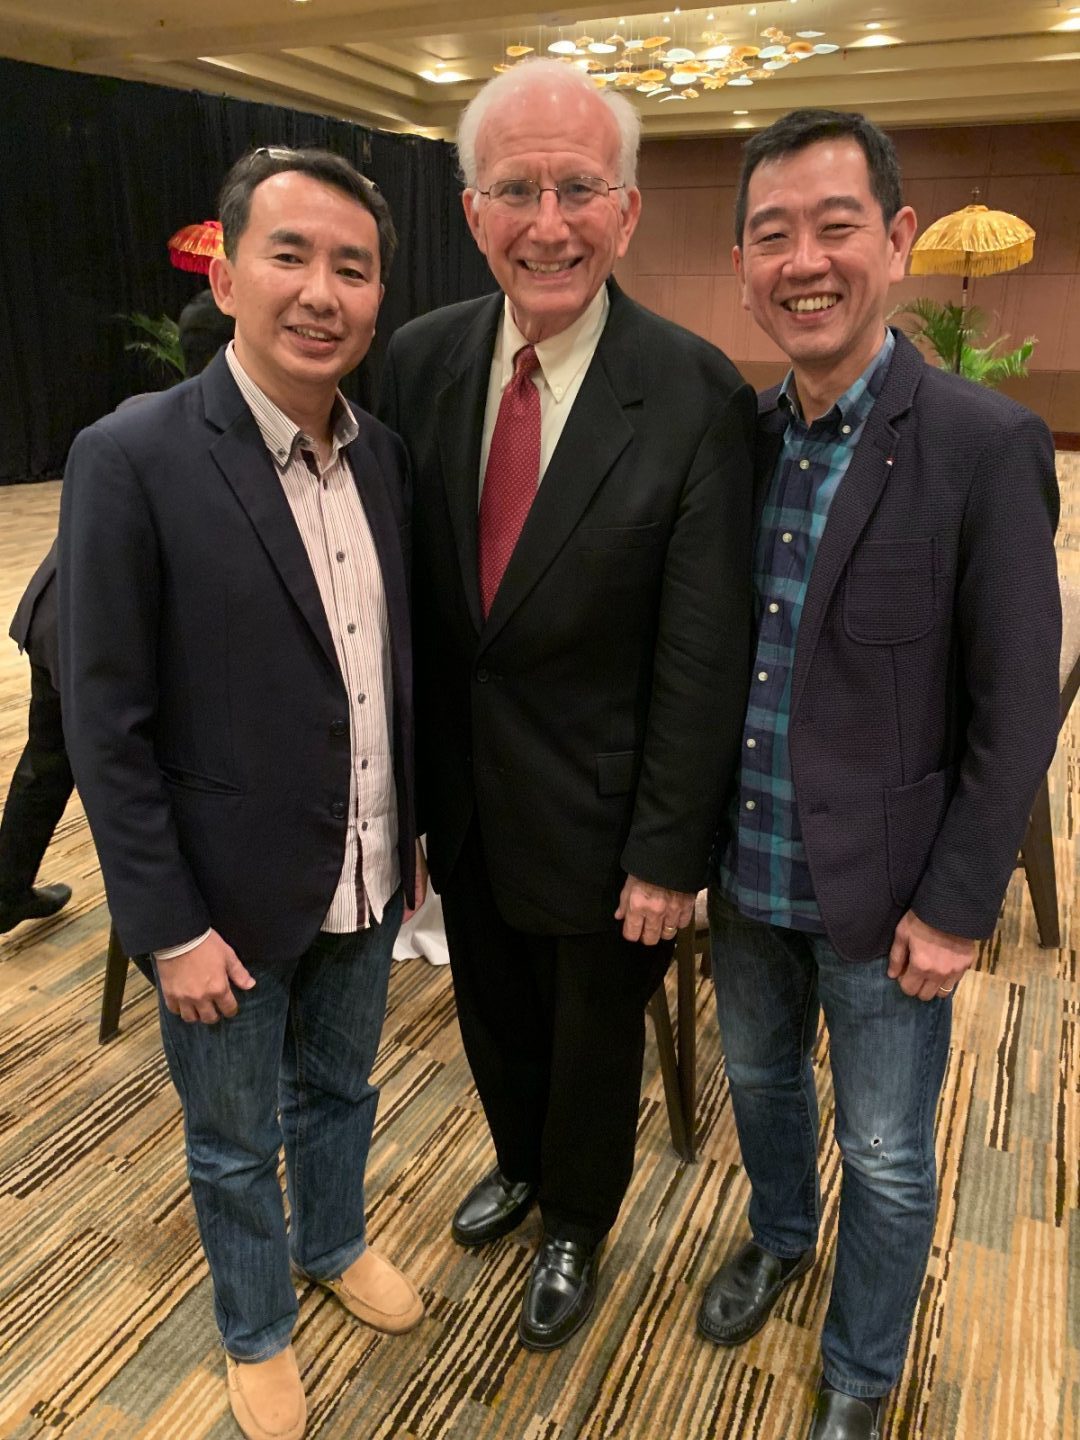 Hock Chye with Steve Douglas, Cru's Global President, and Kok Hiang